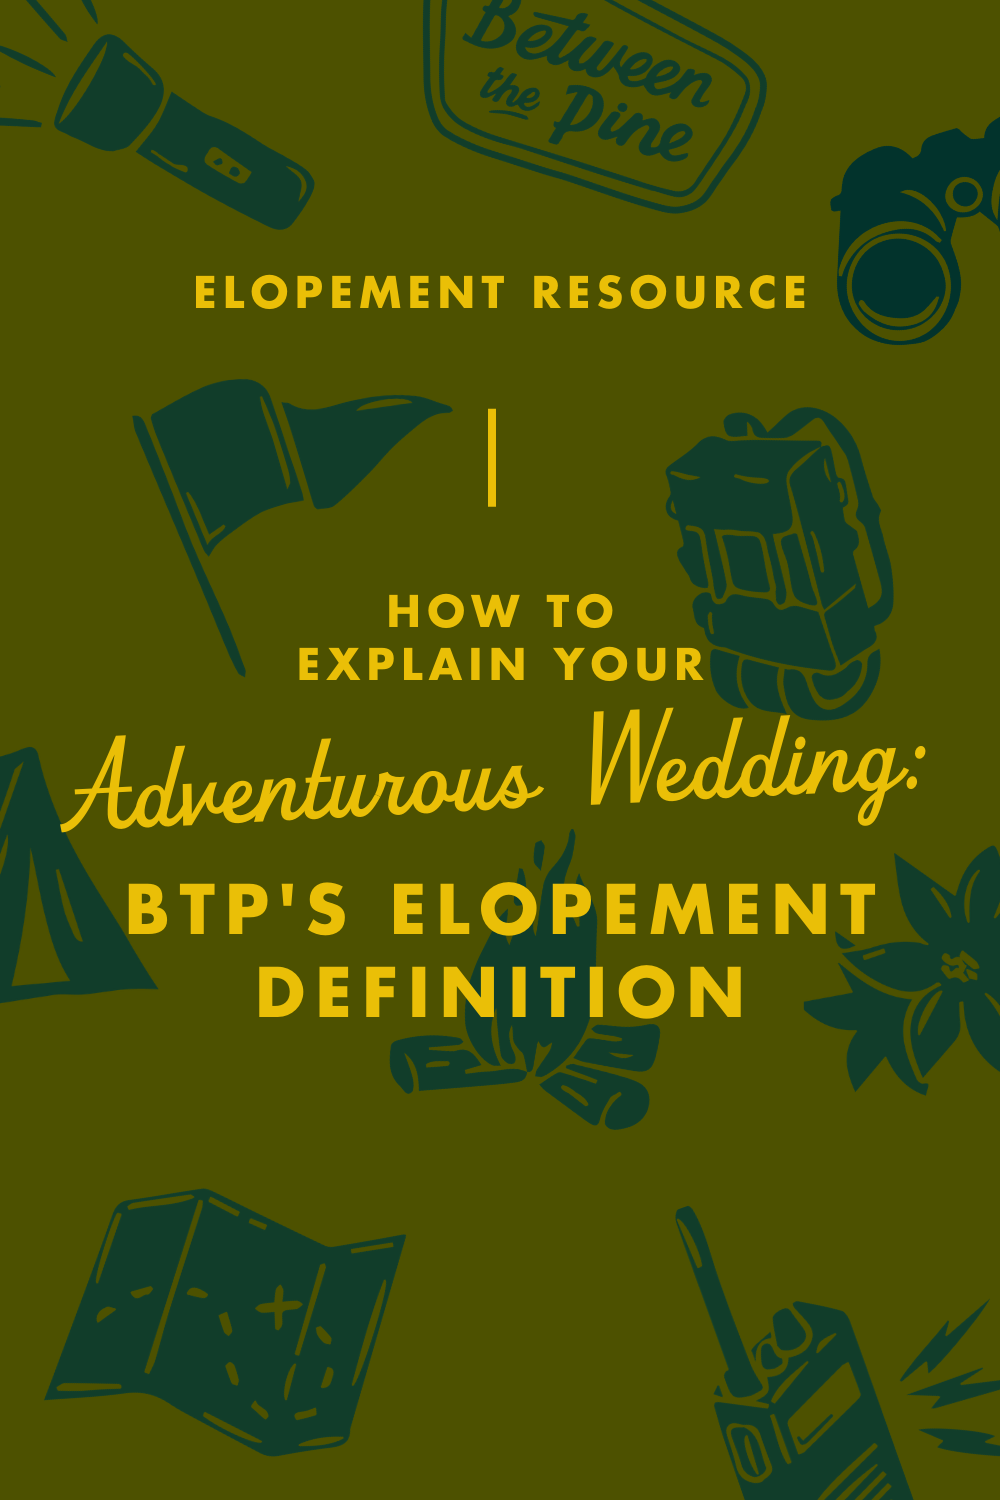 How to Explain Your Adventurous Wedding: Between the Pine’s Elopement Definition